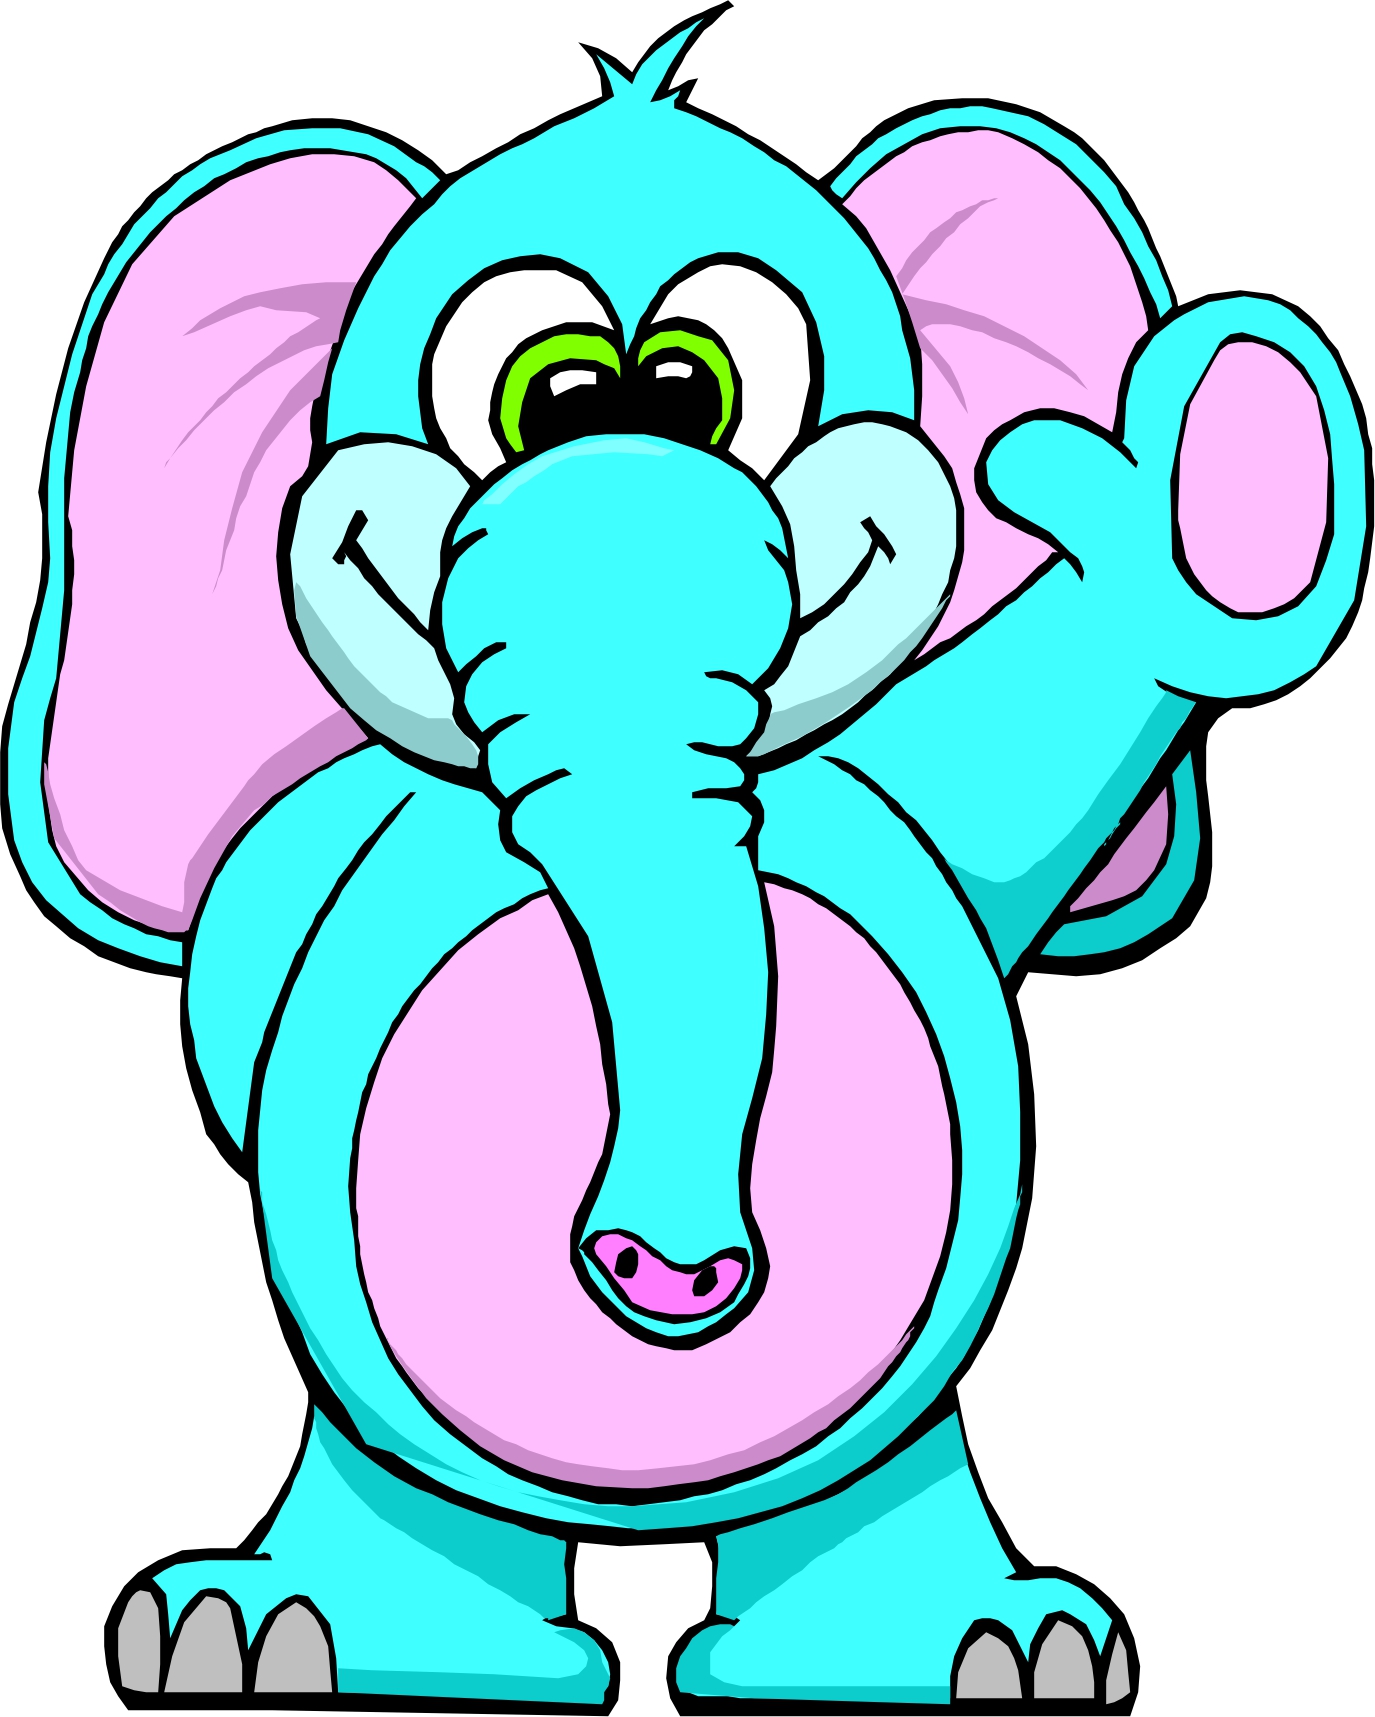 Cartoon Elephants Pictures - ClipArt Best